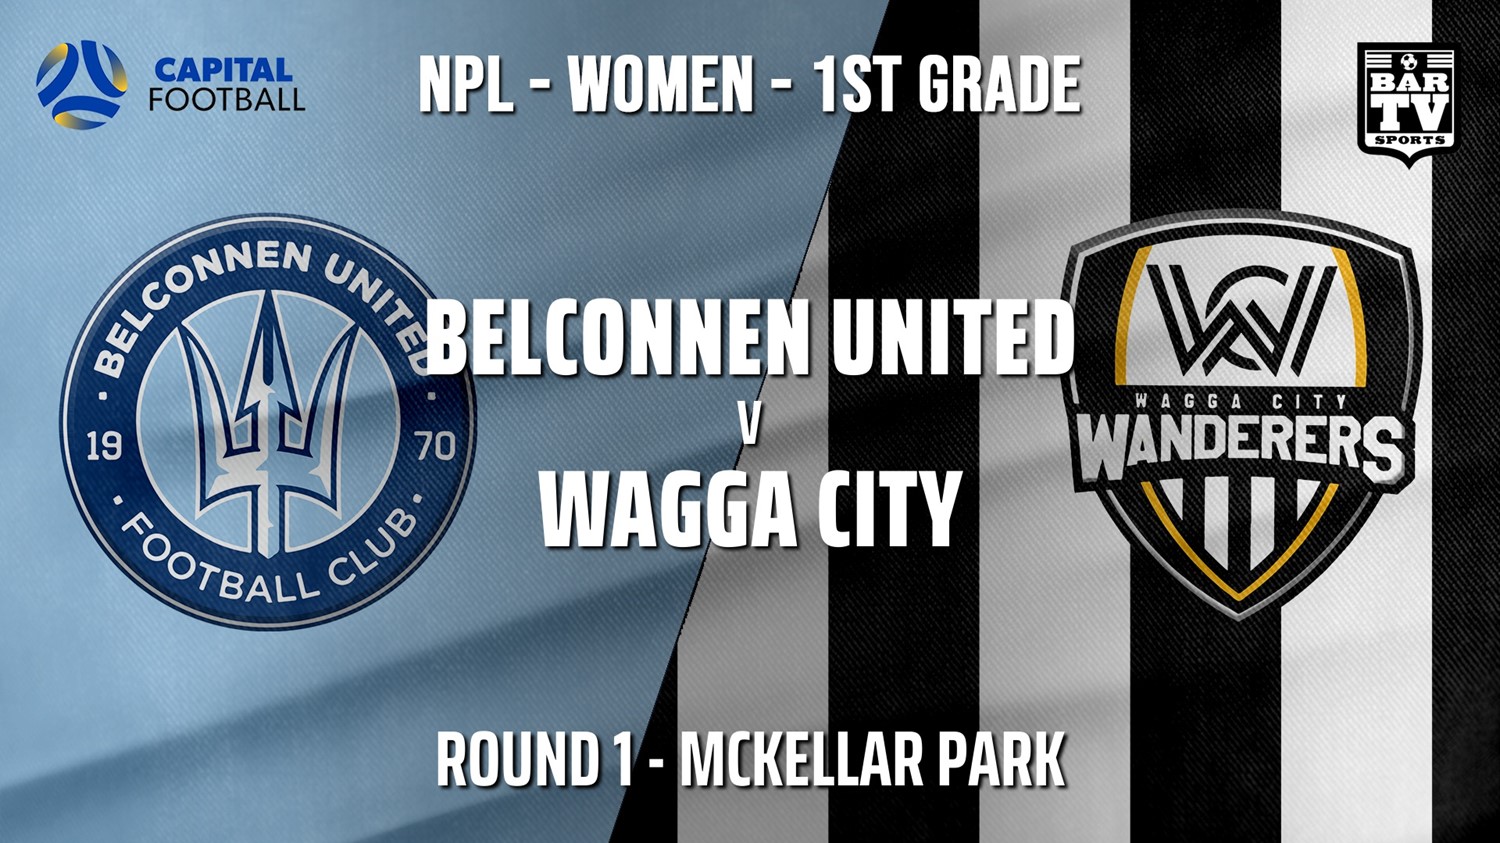 NPLW - Capital Round 1 - Belconnen United (women) v Wagga City Wanderers FC (women) Slate Image